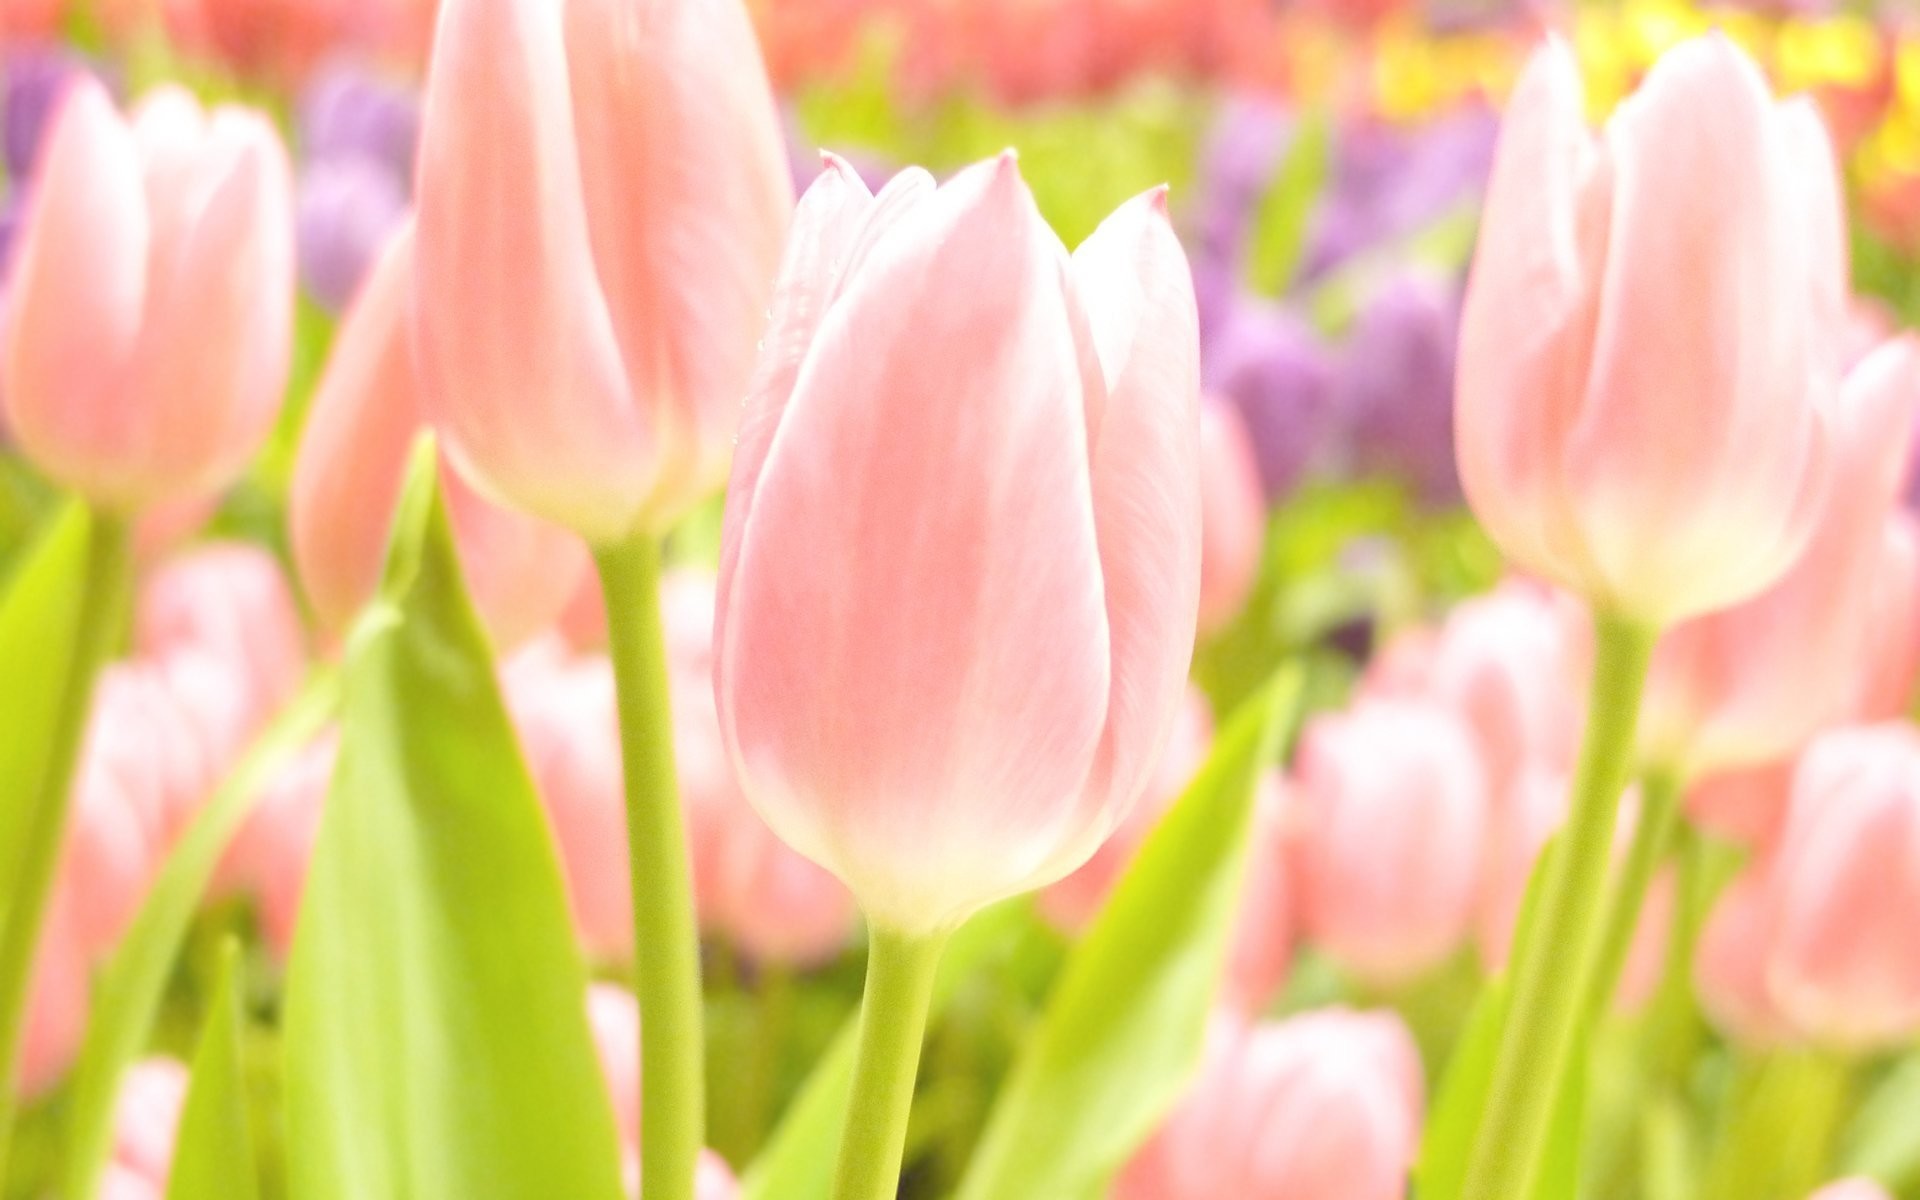 flower summer spring summer wallpaper spring wallpaper tulips focus bokeh pink yellow white tender sweet tulips